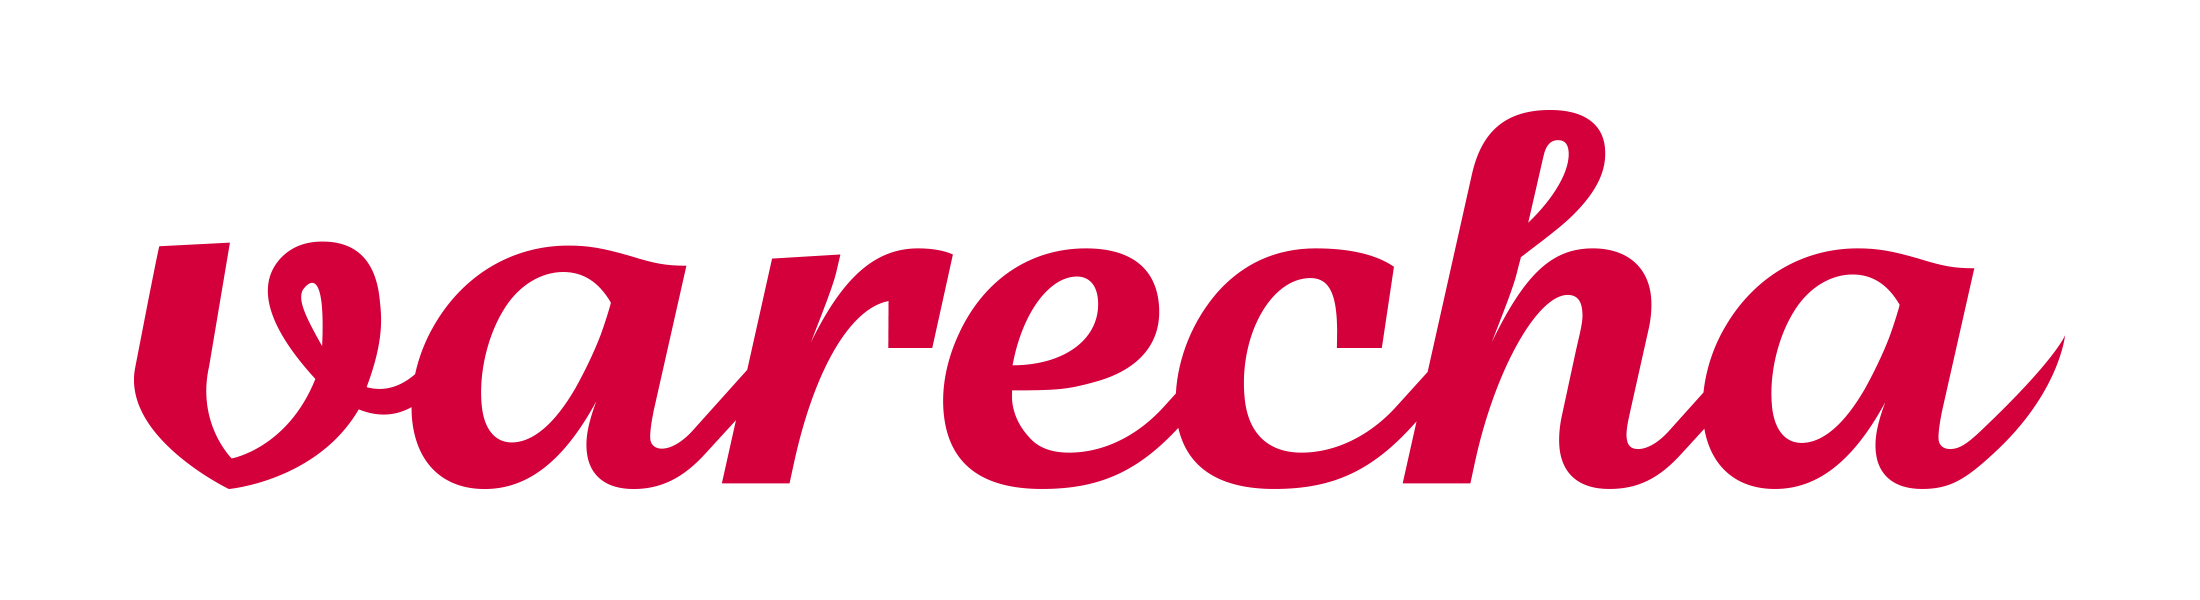 Varecha Logo